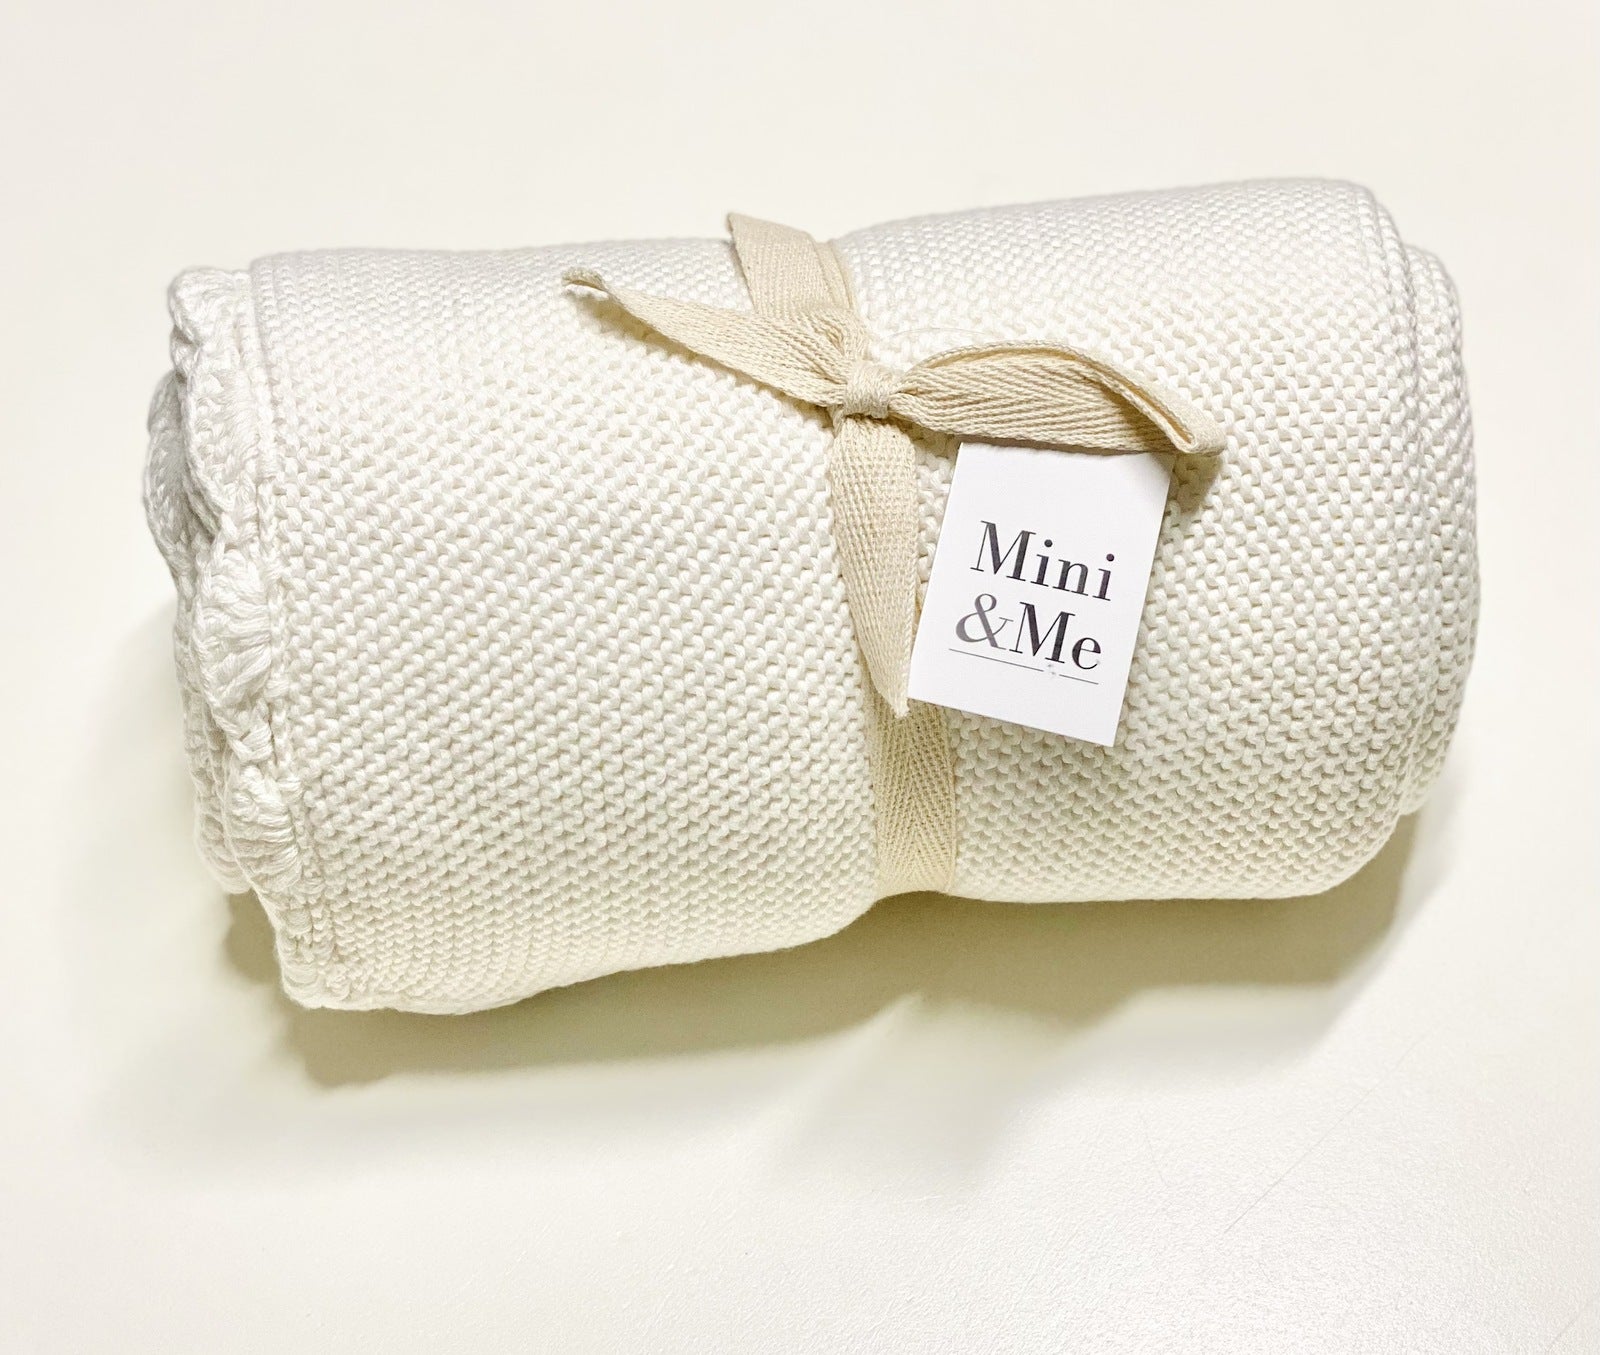 Mini & Me - Transfer with Crochet Ivory